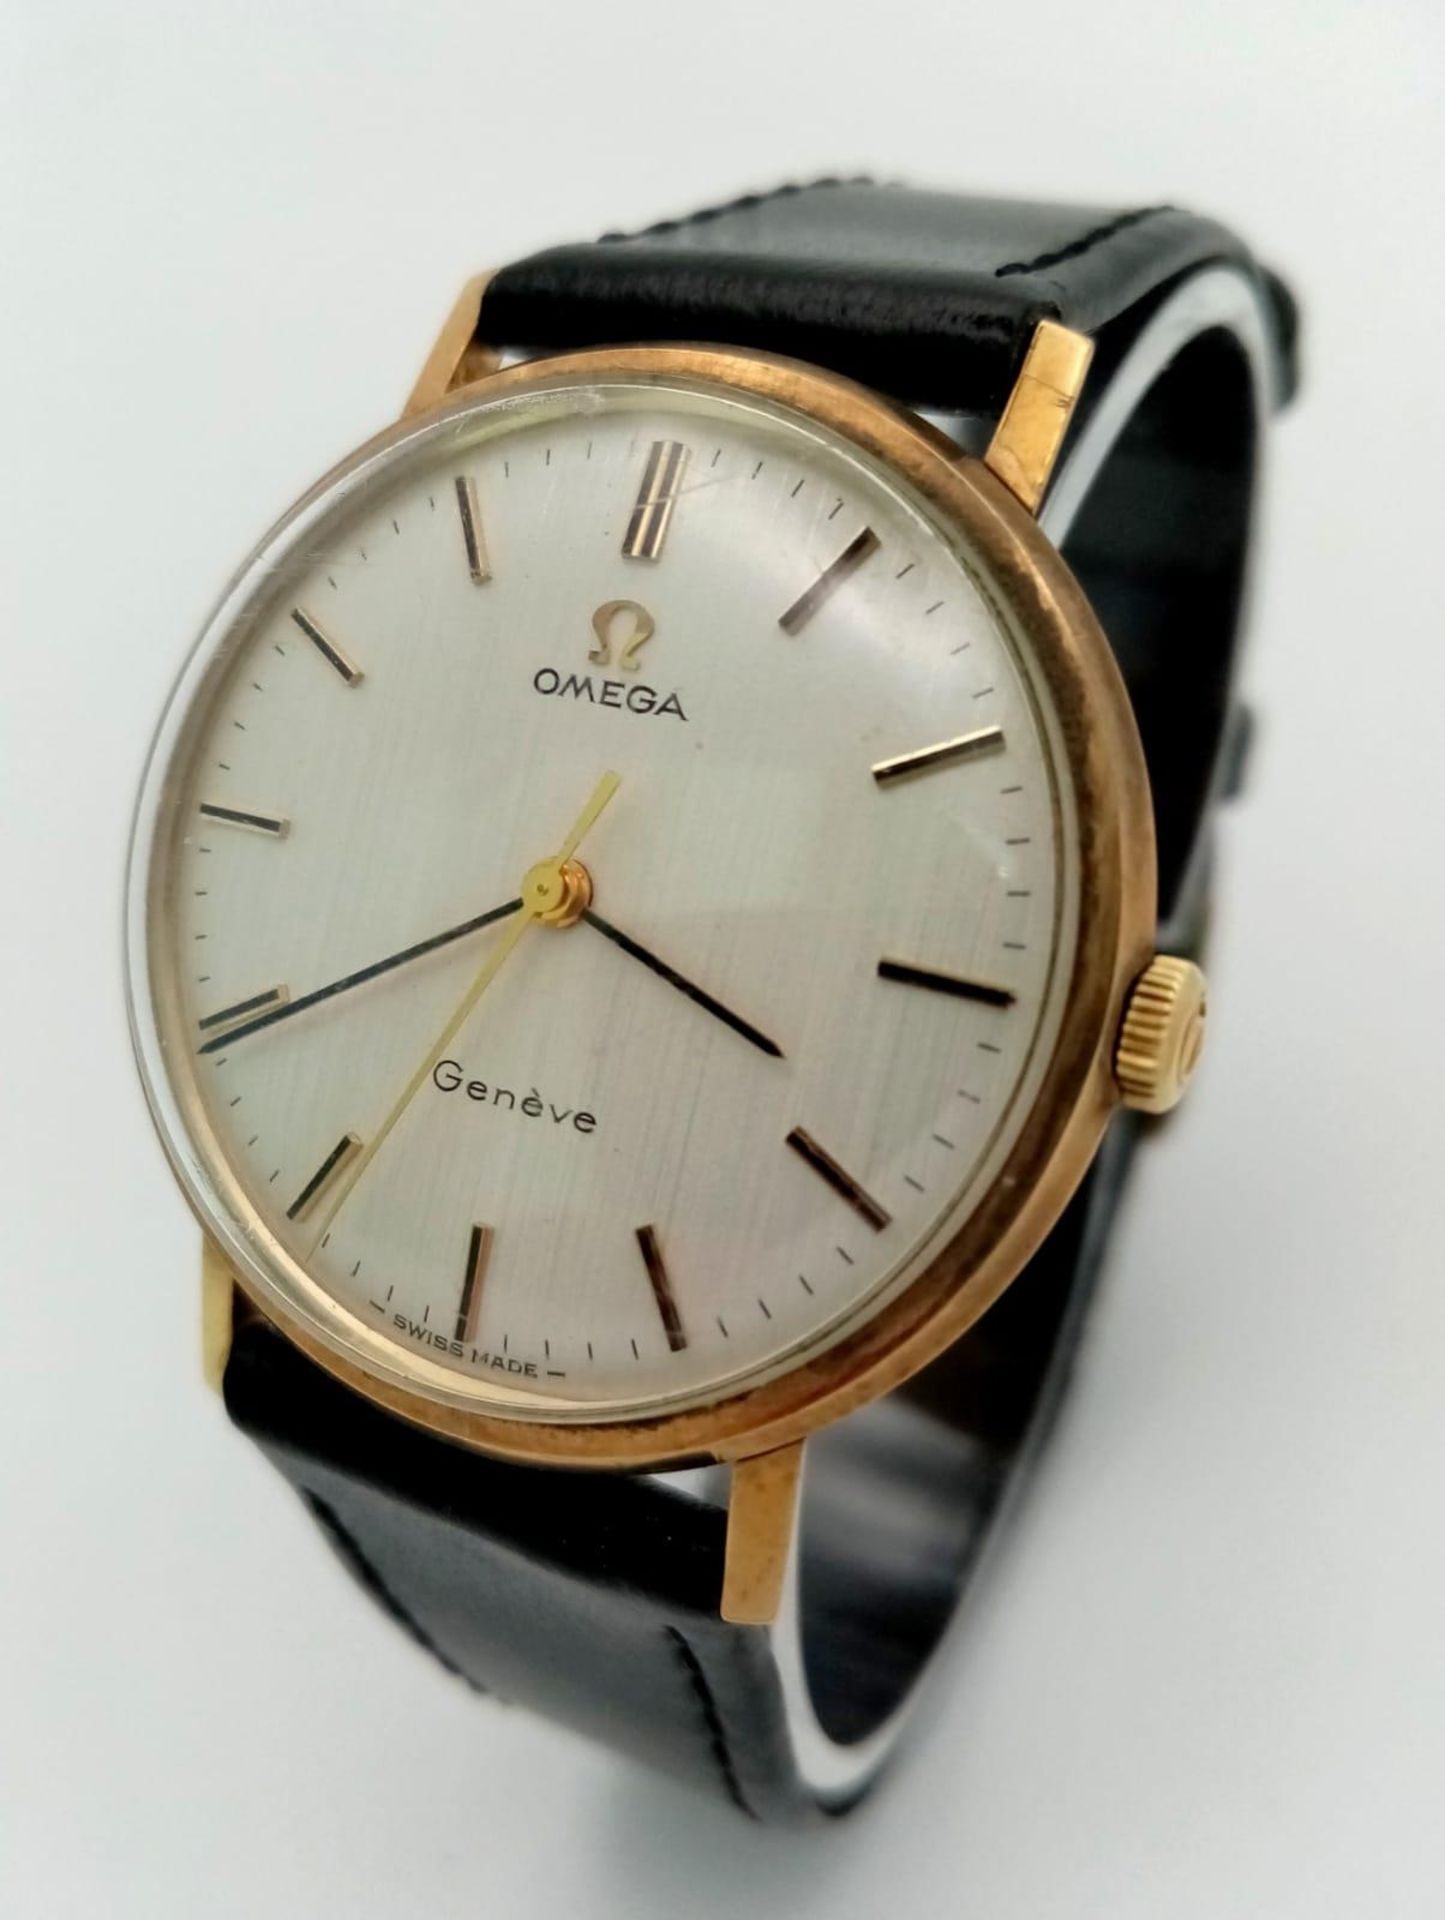 A Beautiful Vintage 9K Gold Omega Geneve Gents Watch. Black leather strap. 9K gold case - 34mm.